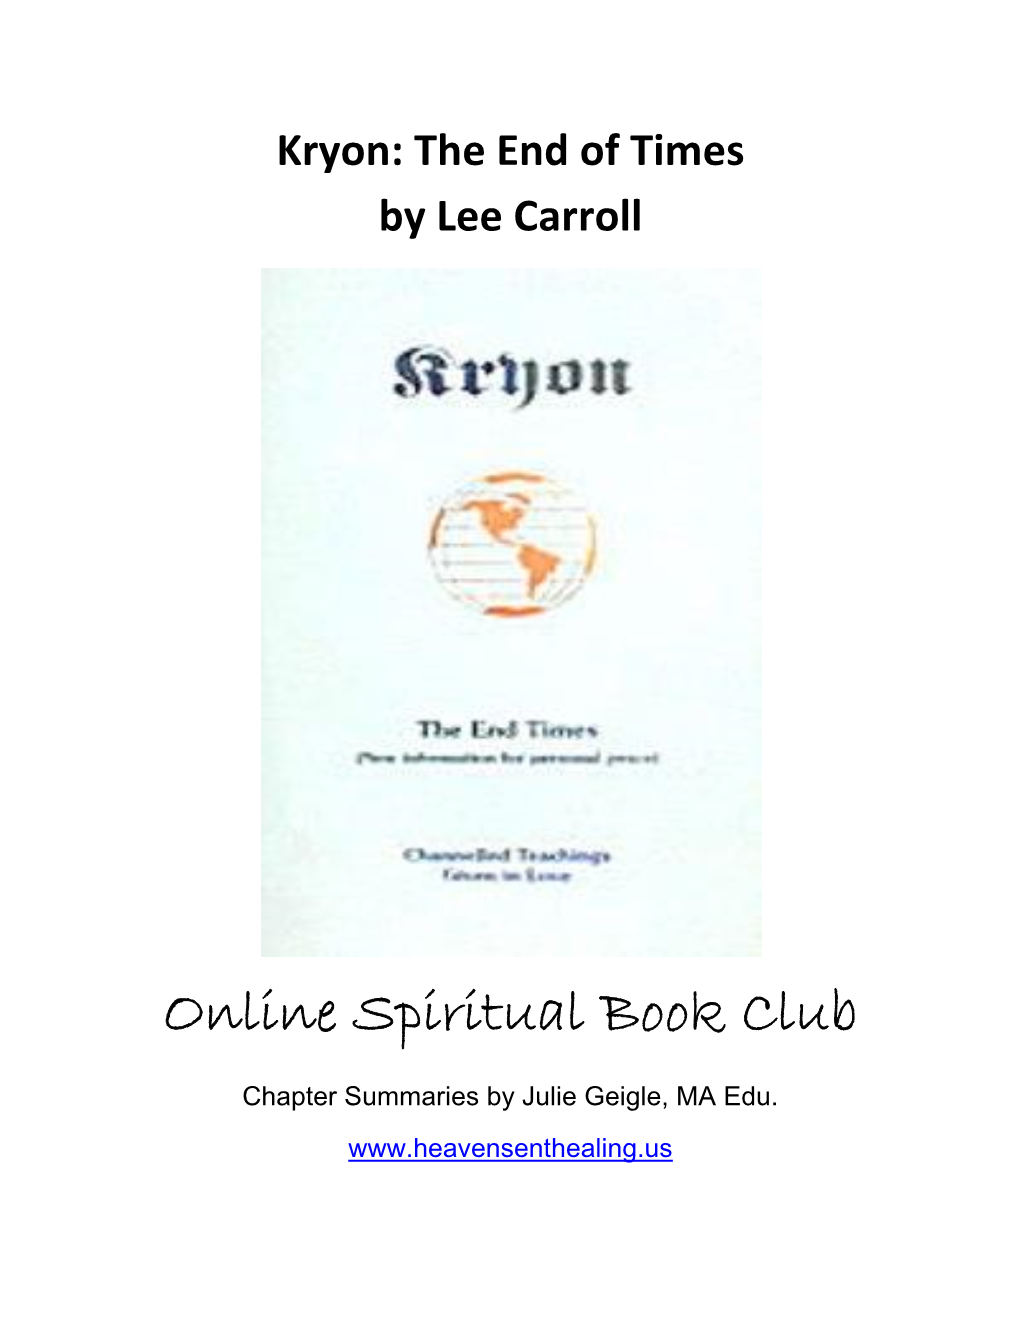 Online Spiritual Book Club